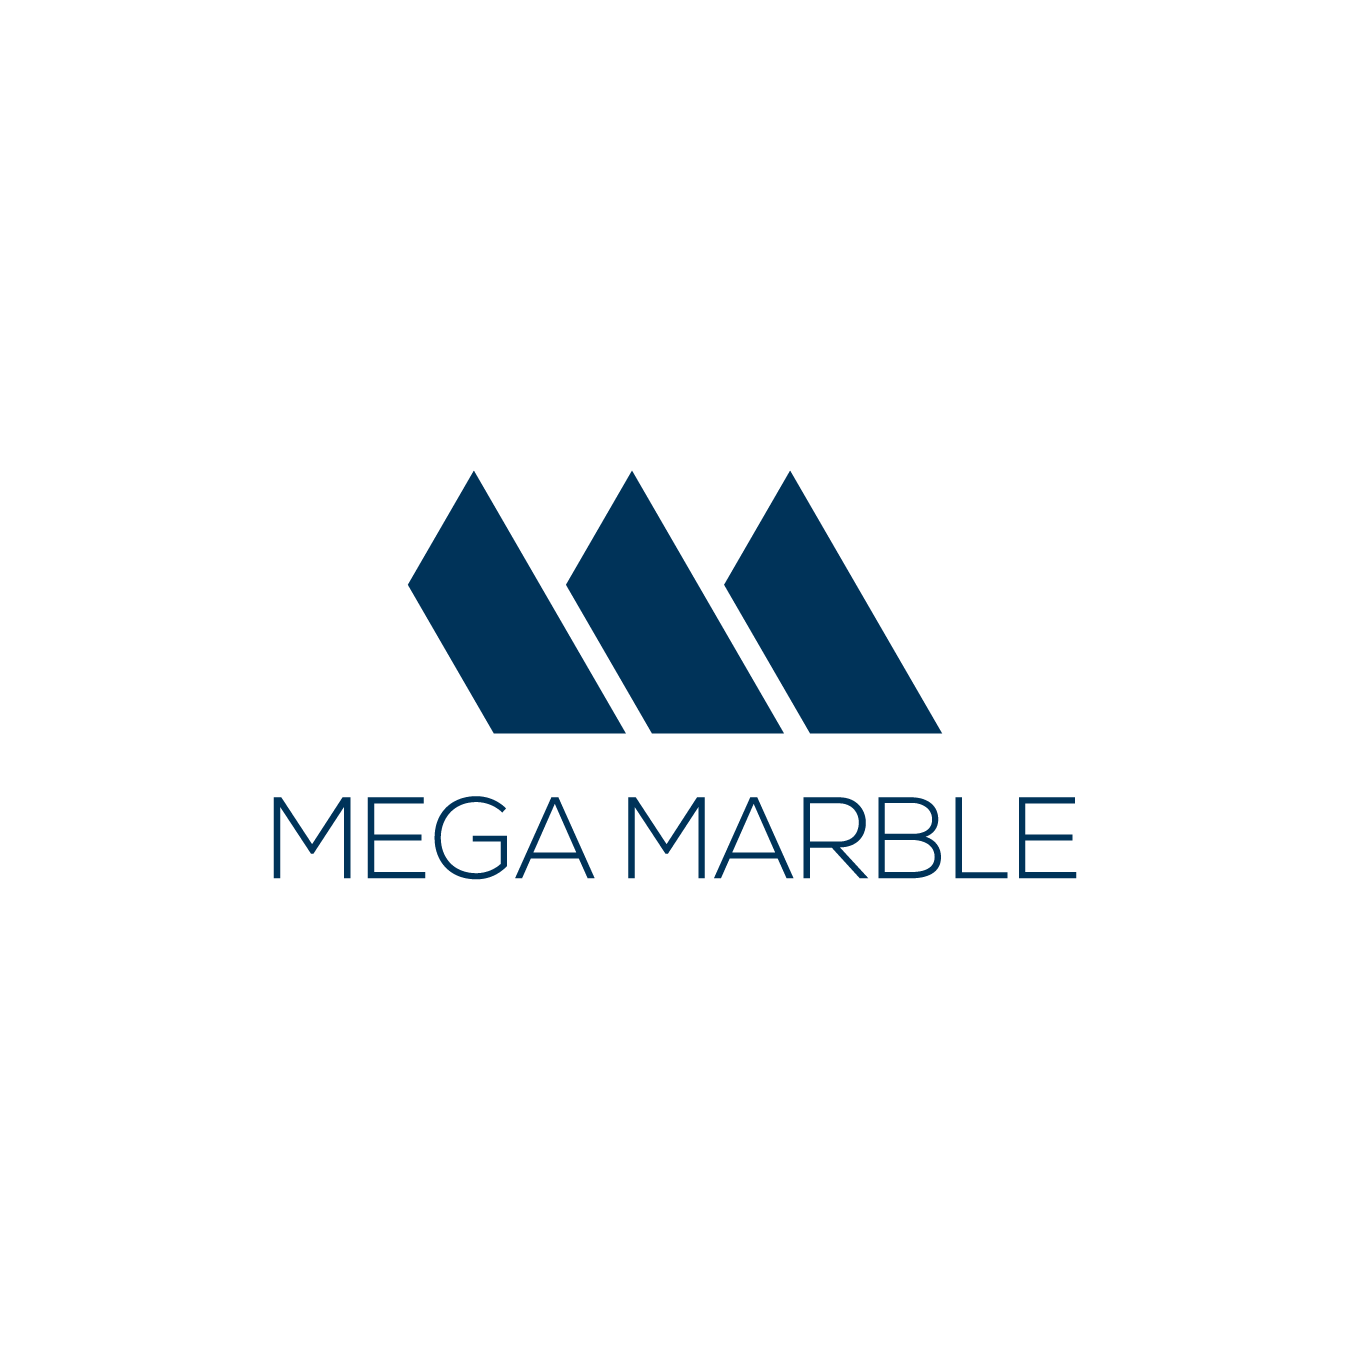 Marble Logo - Professional, Modern, Construction Logo Design for Mega Marble